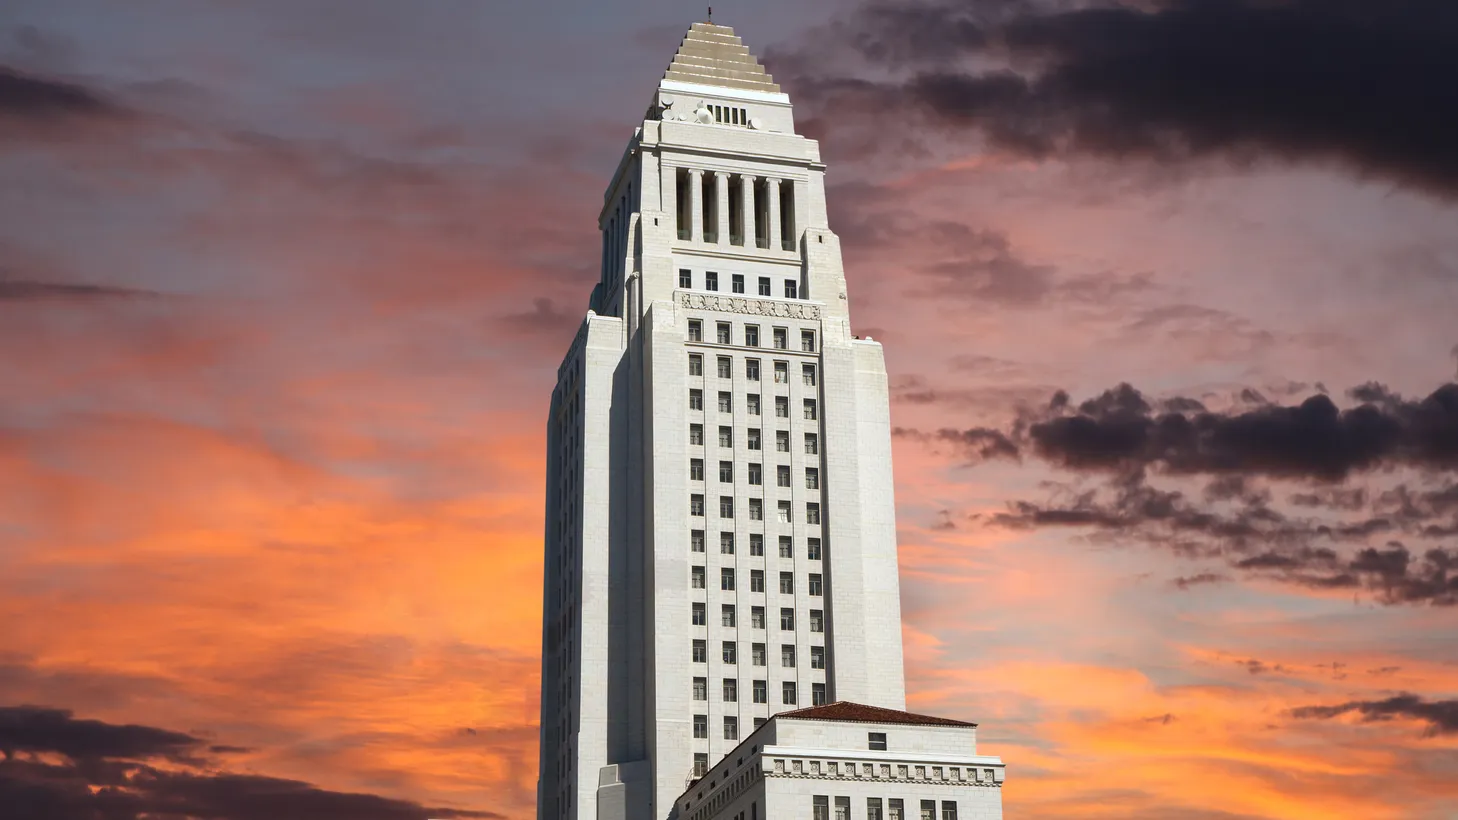 LA City Hall is seen against a sunrise sky.